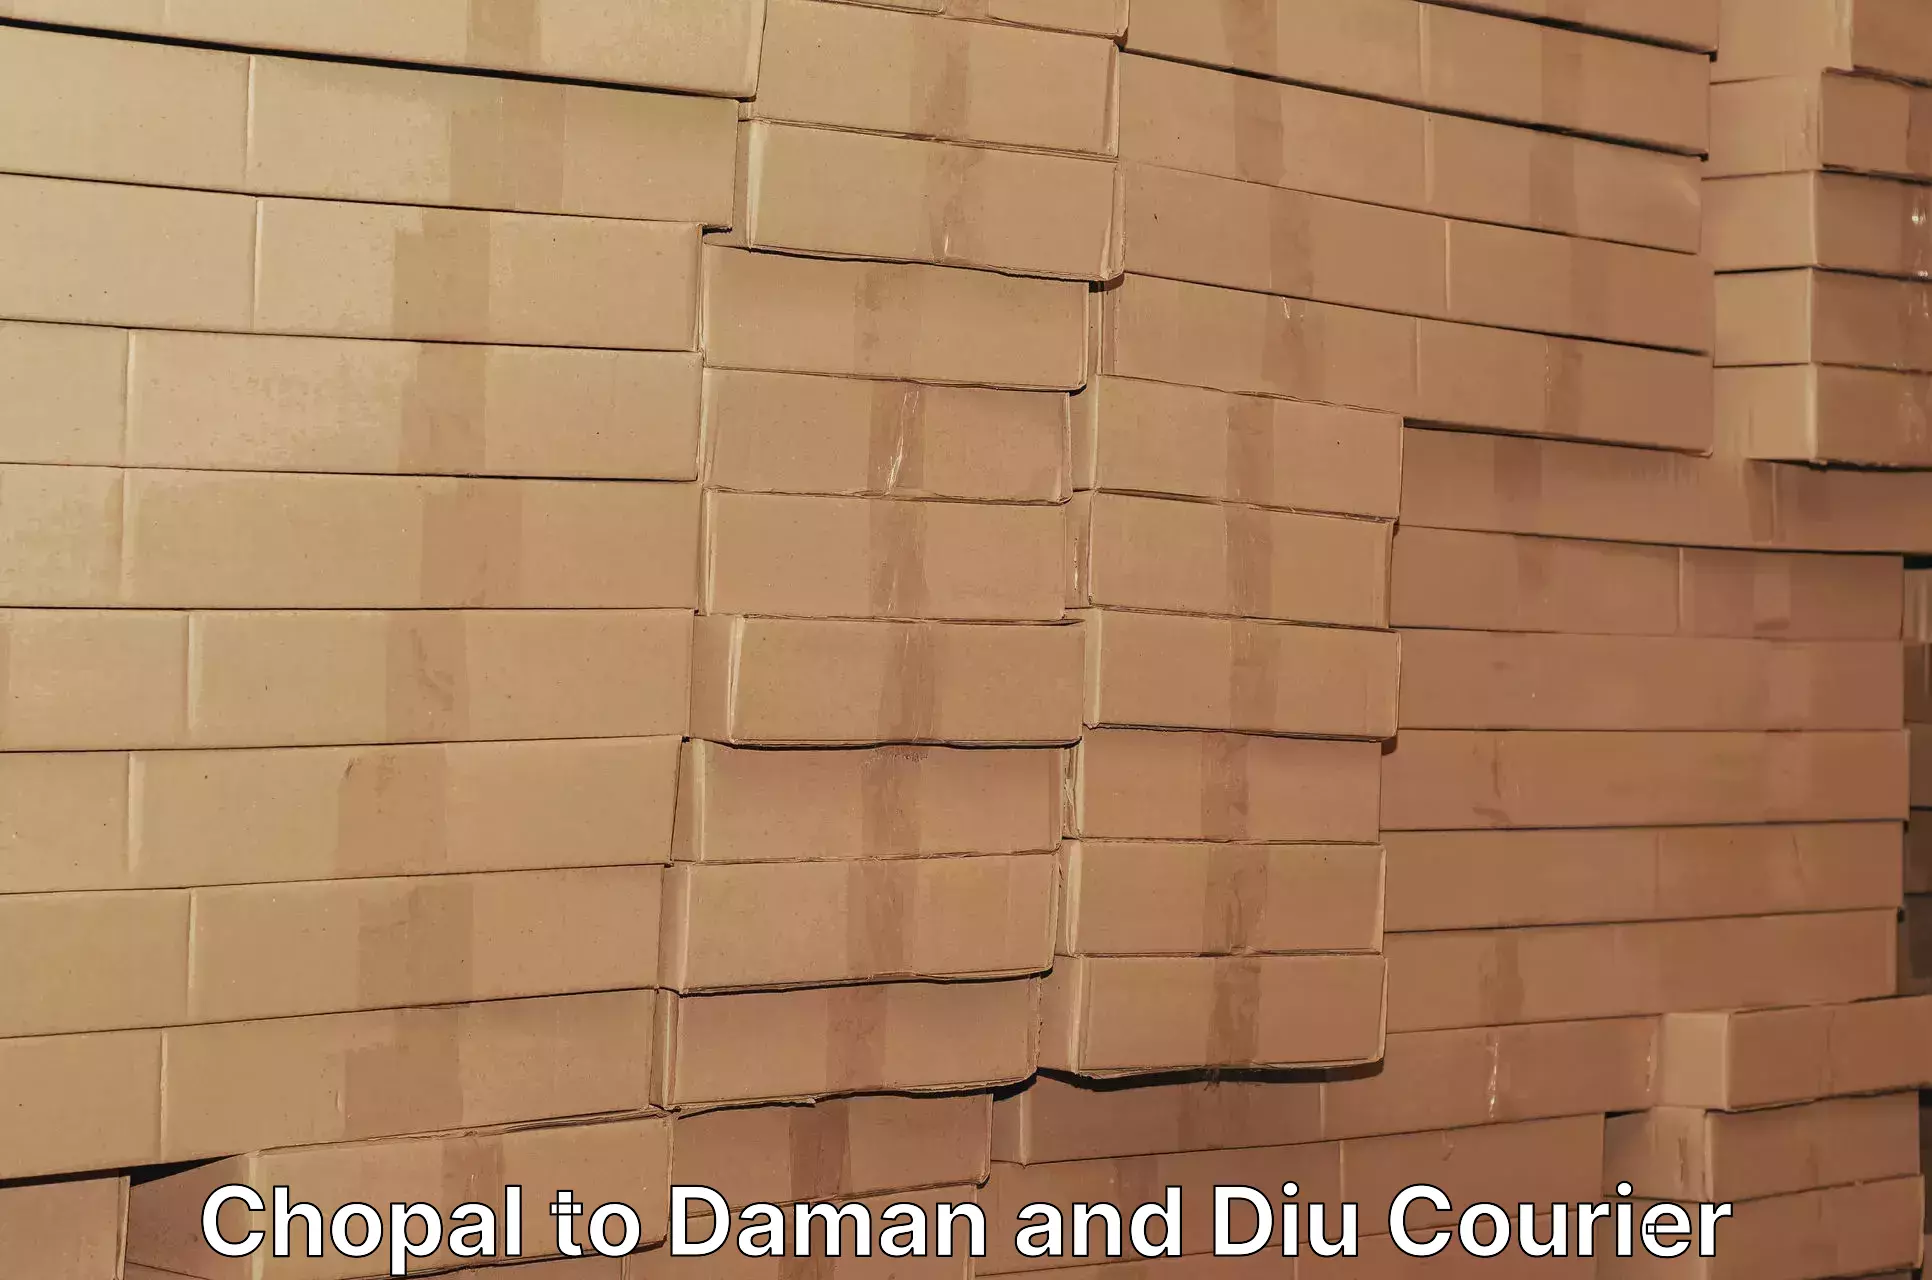 Efficient order fulfillment Chopal to Daman and Diu